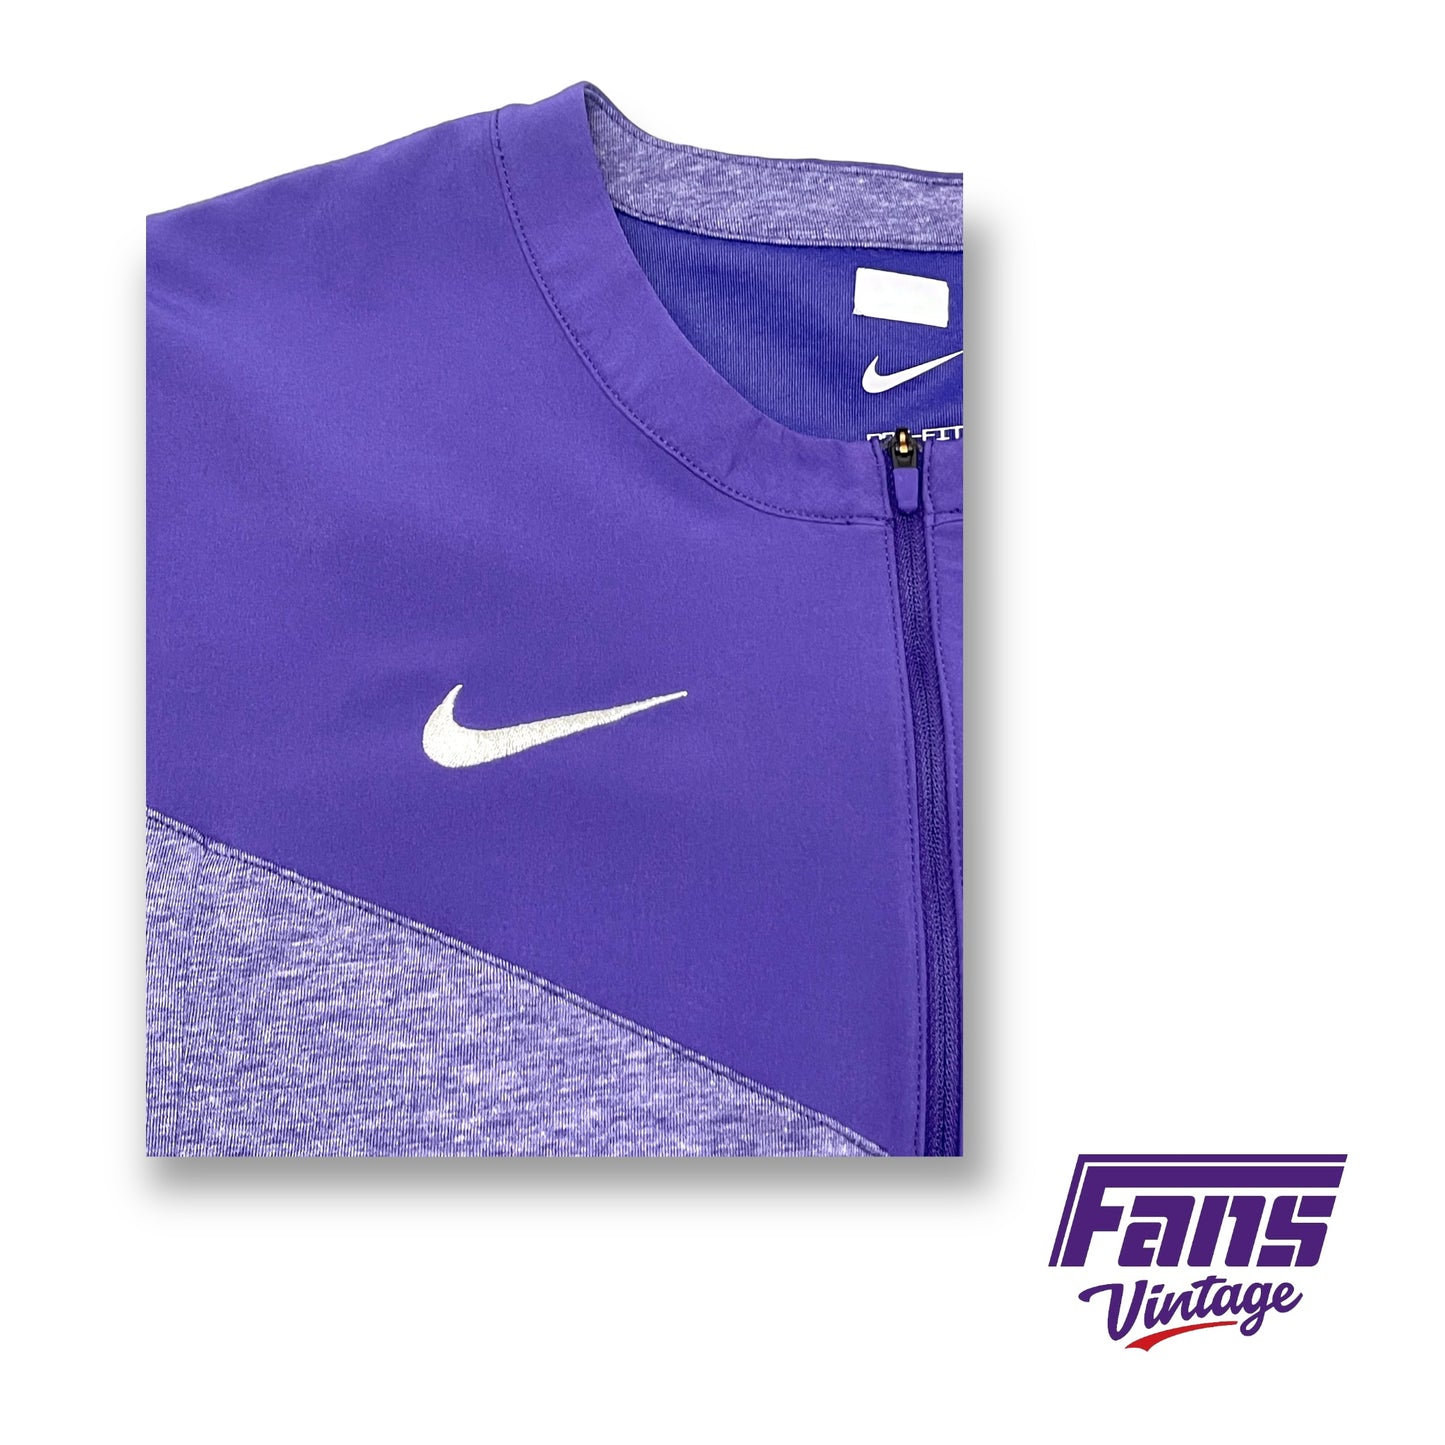 TCU Basketball Coach’s Sideline Pullover - Light Heather Purple with True Purple Color blocking